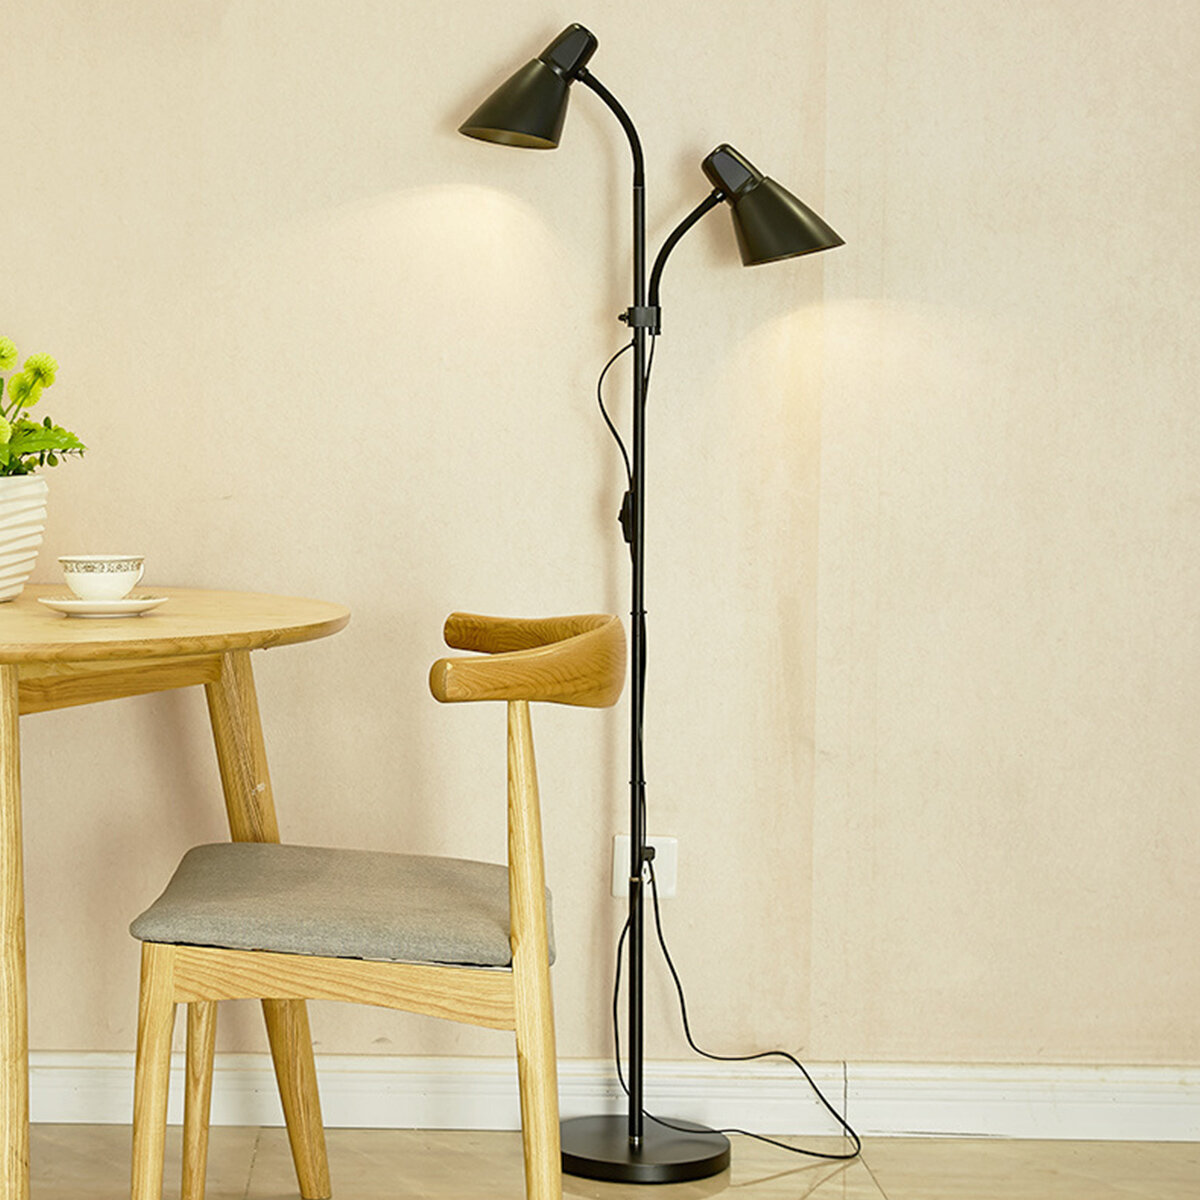 

Floor LED Lamp Uplight Reading Dual Lamps Double/Single Uplighter Adjust Lights